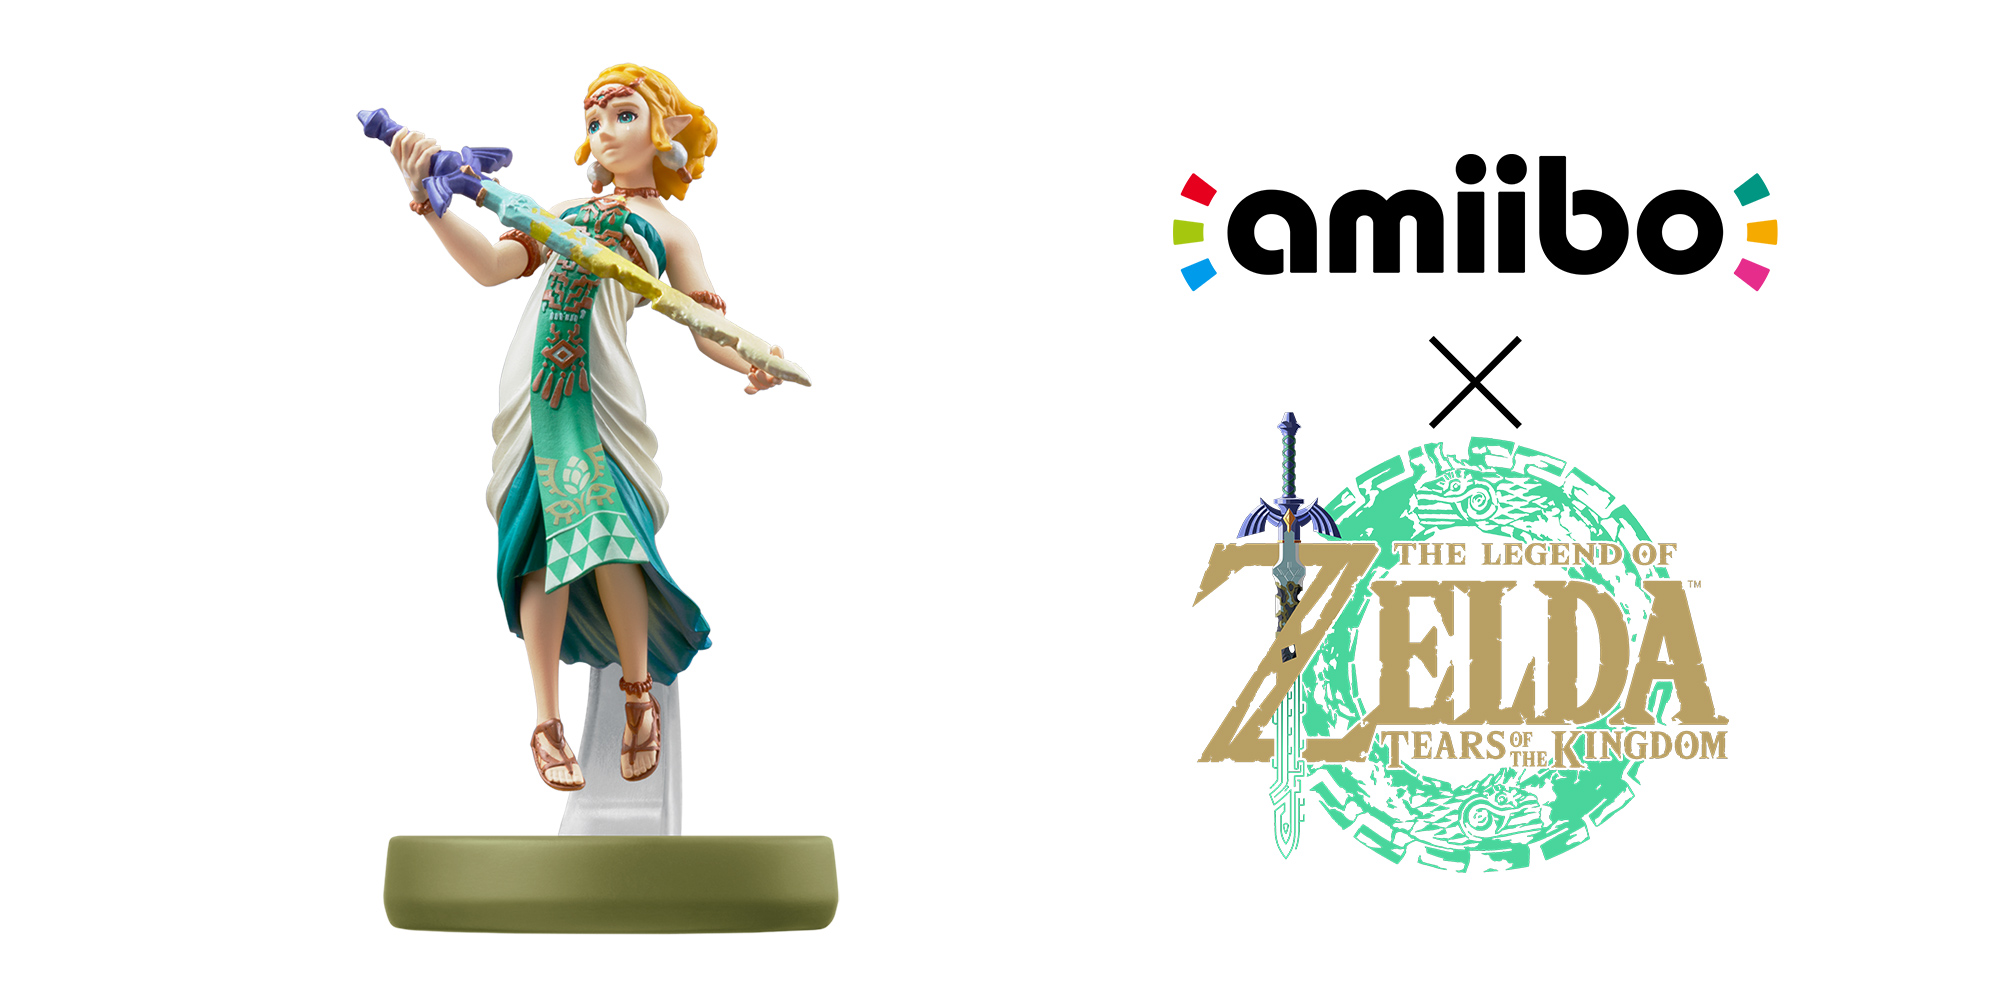 The Legend of Zelda Tears of the Kingdom amiibo: Where to buy UK